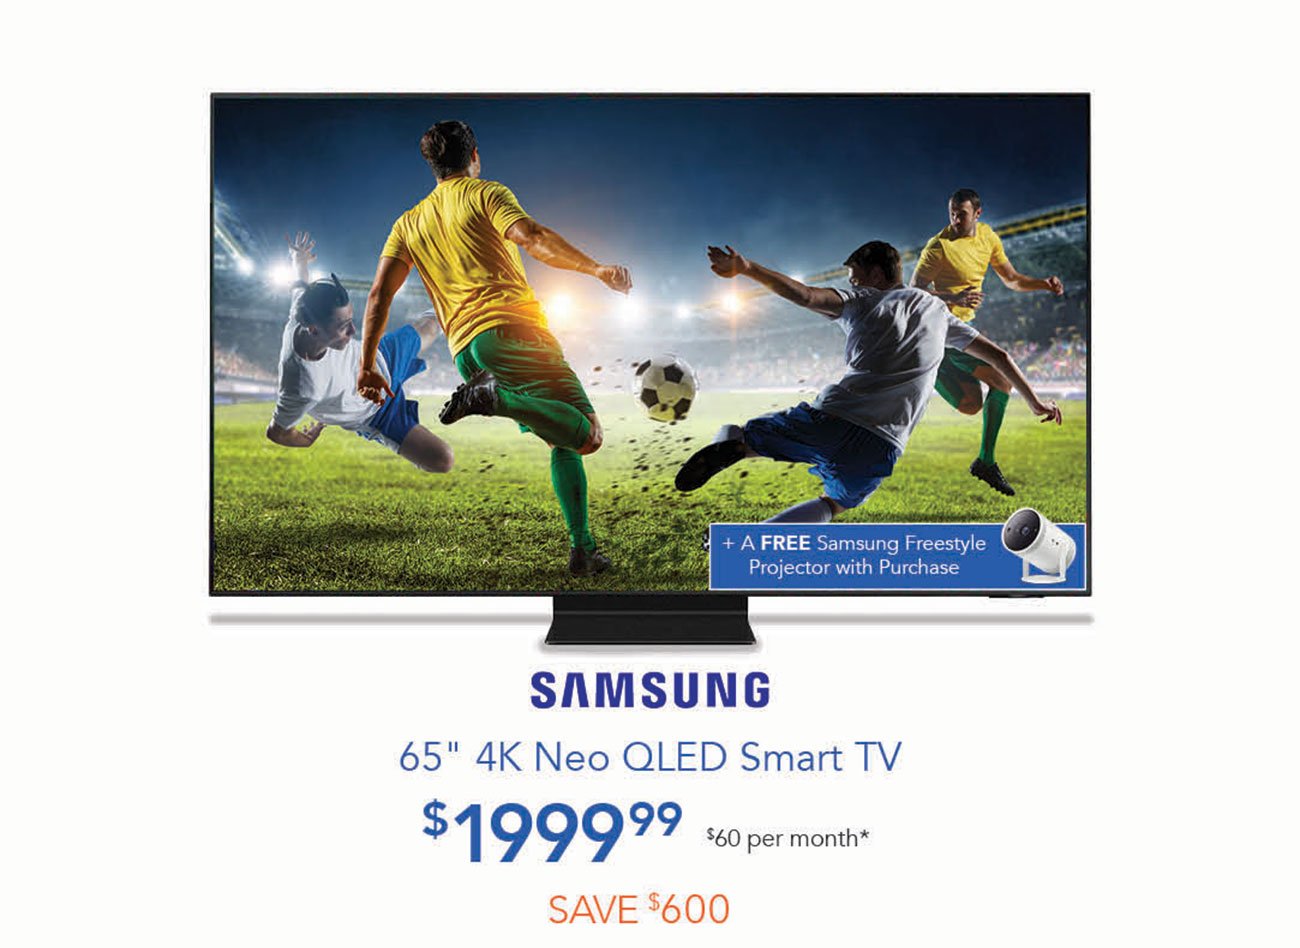 M IRV R SAMSUNG 65" 4K Neo QLED Smart TV $1 999 99 $60 per month* 